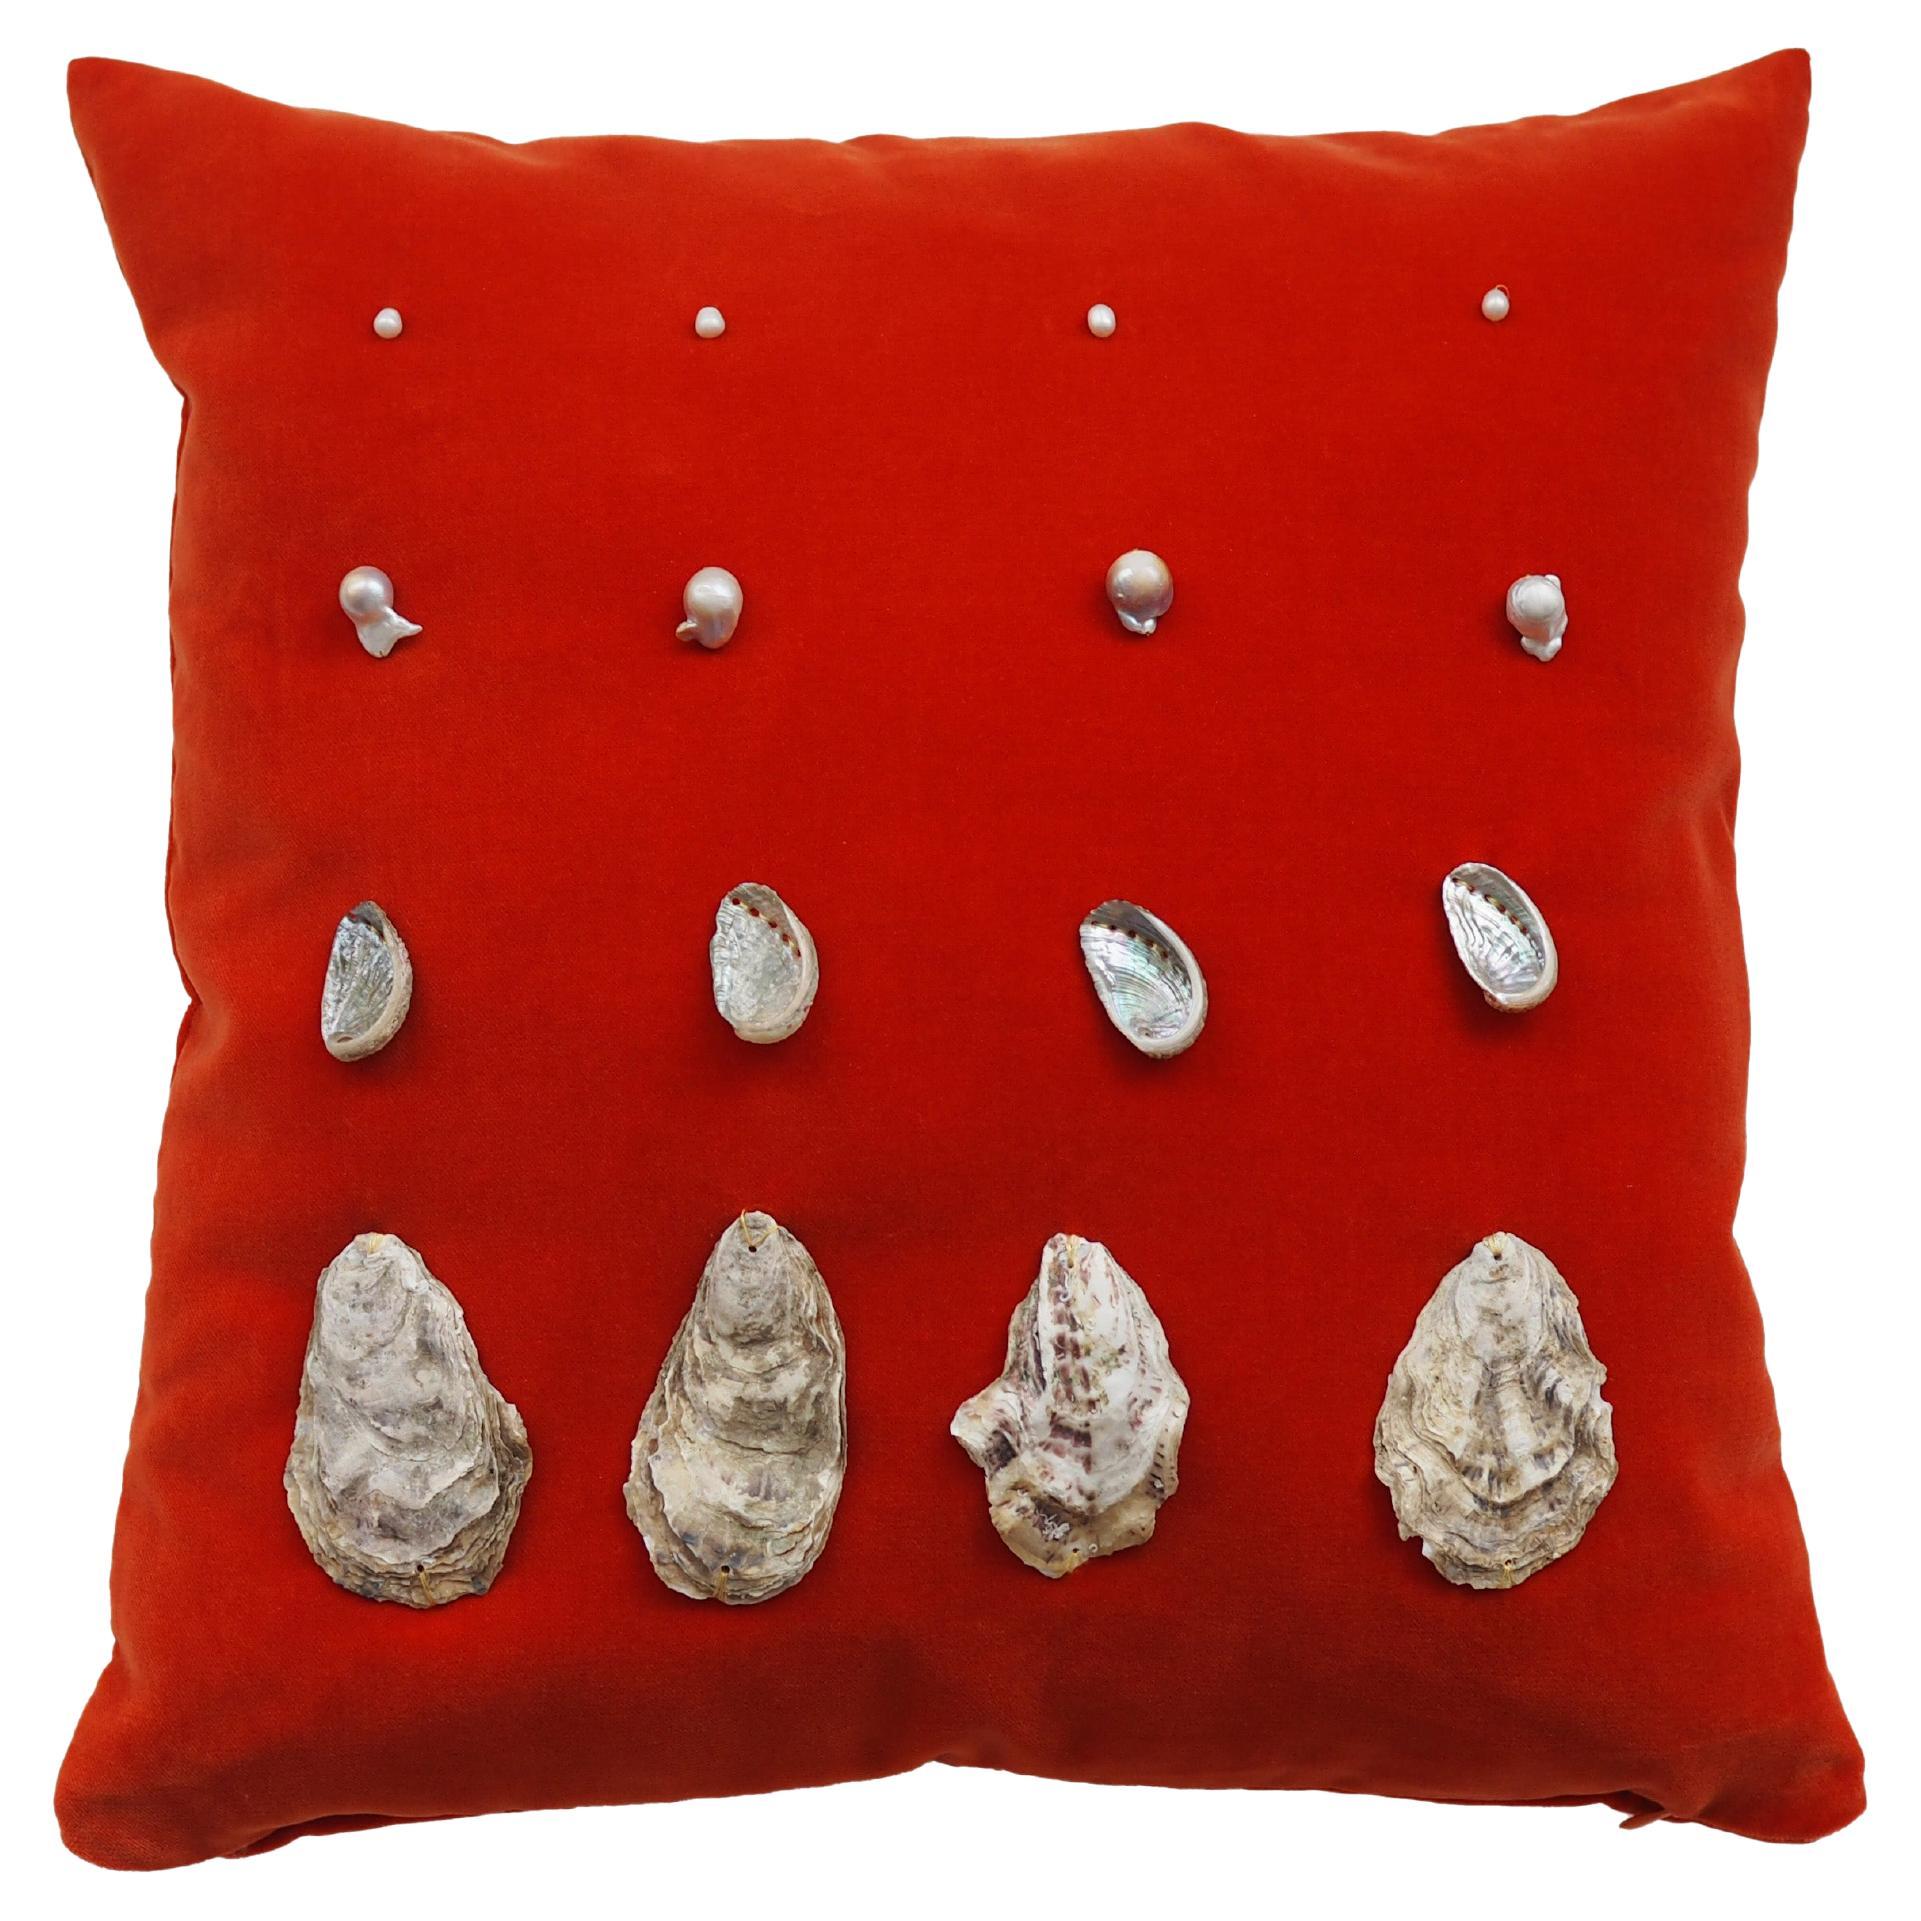 Bon Appetit 007 Decorative Cushion Culto Ponsoda 21st century desingn